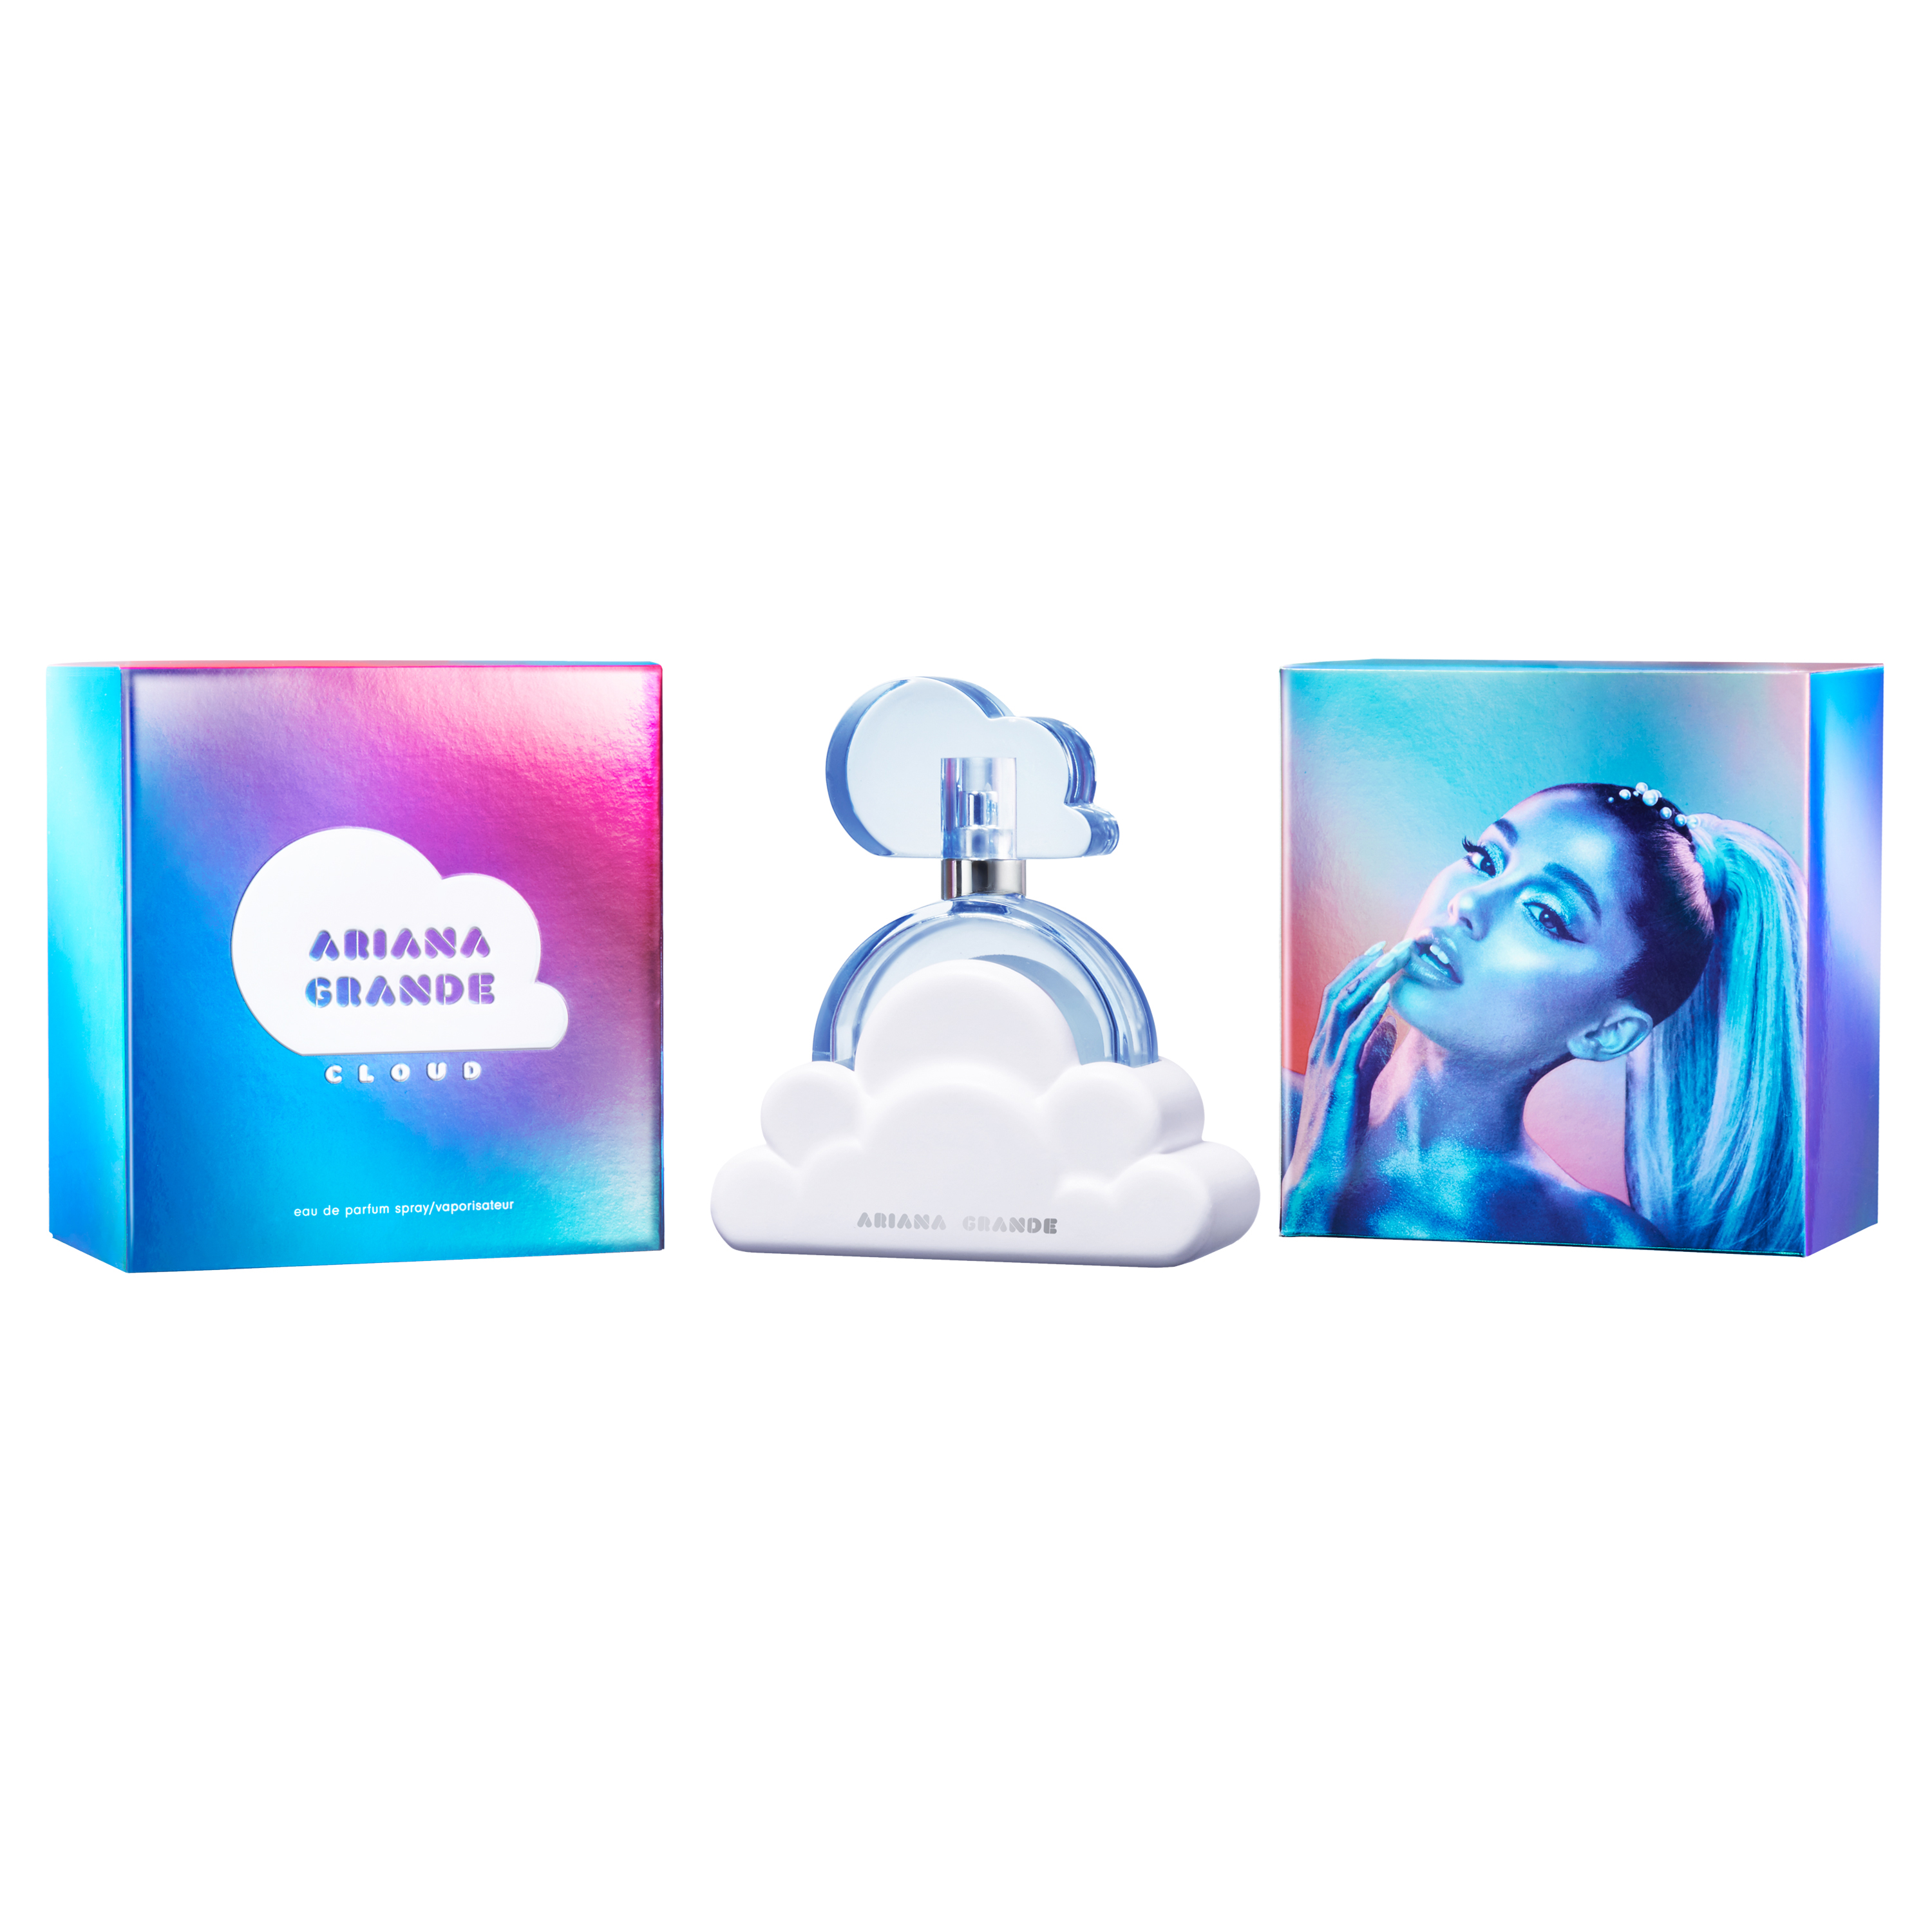 Ariana Grande Cloud Eau De Perfume, Perfume for Women, 1.0 oz - image 3 of 3